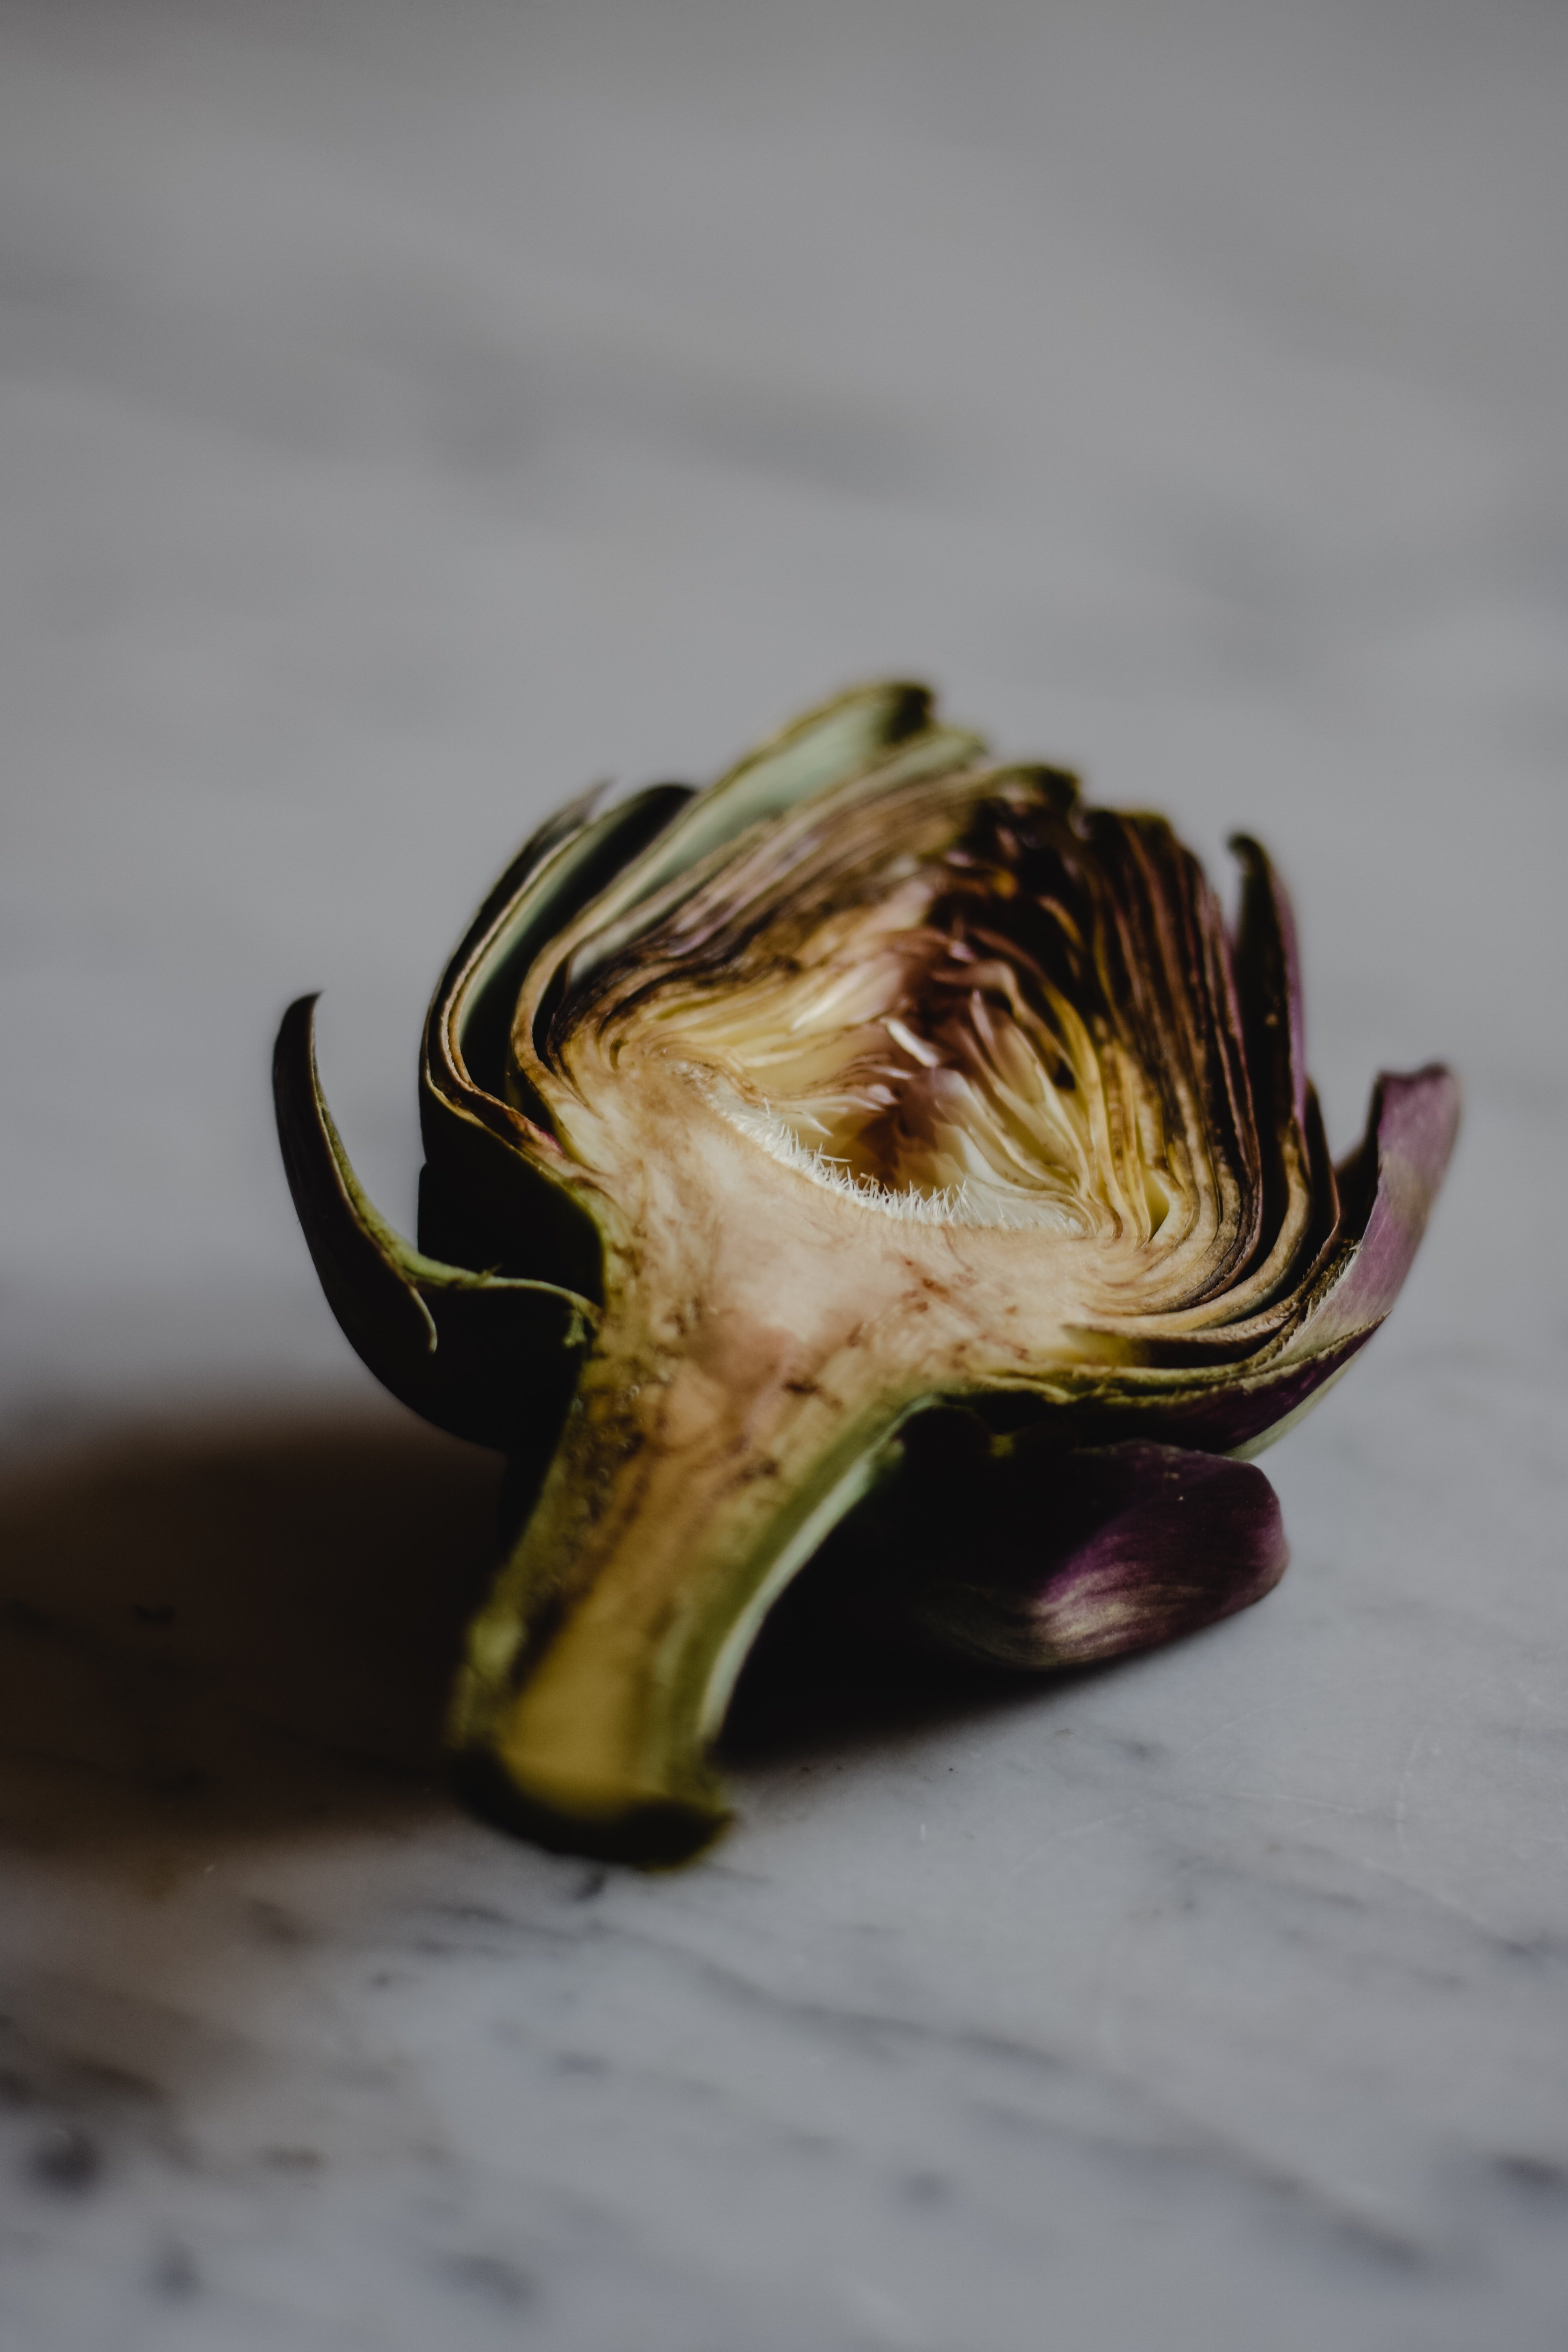 Image of uncooked artichoke | Photo: Pexels